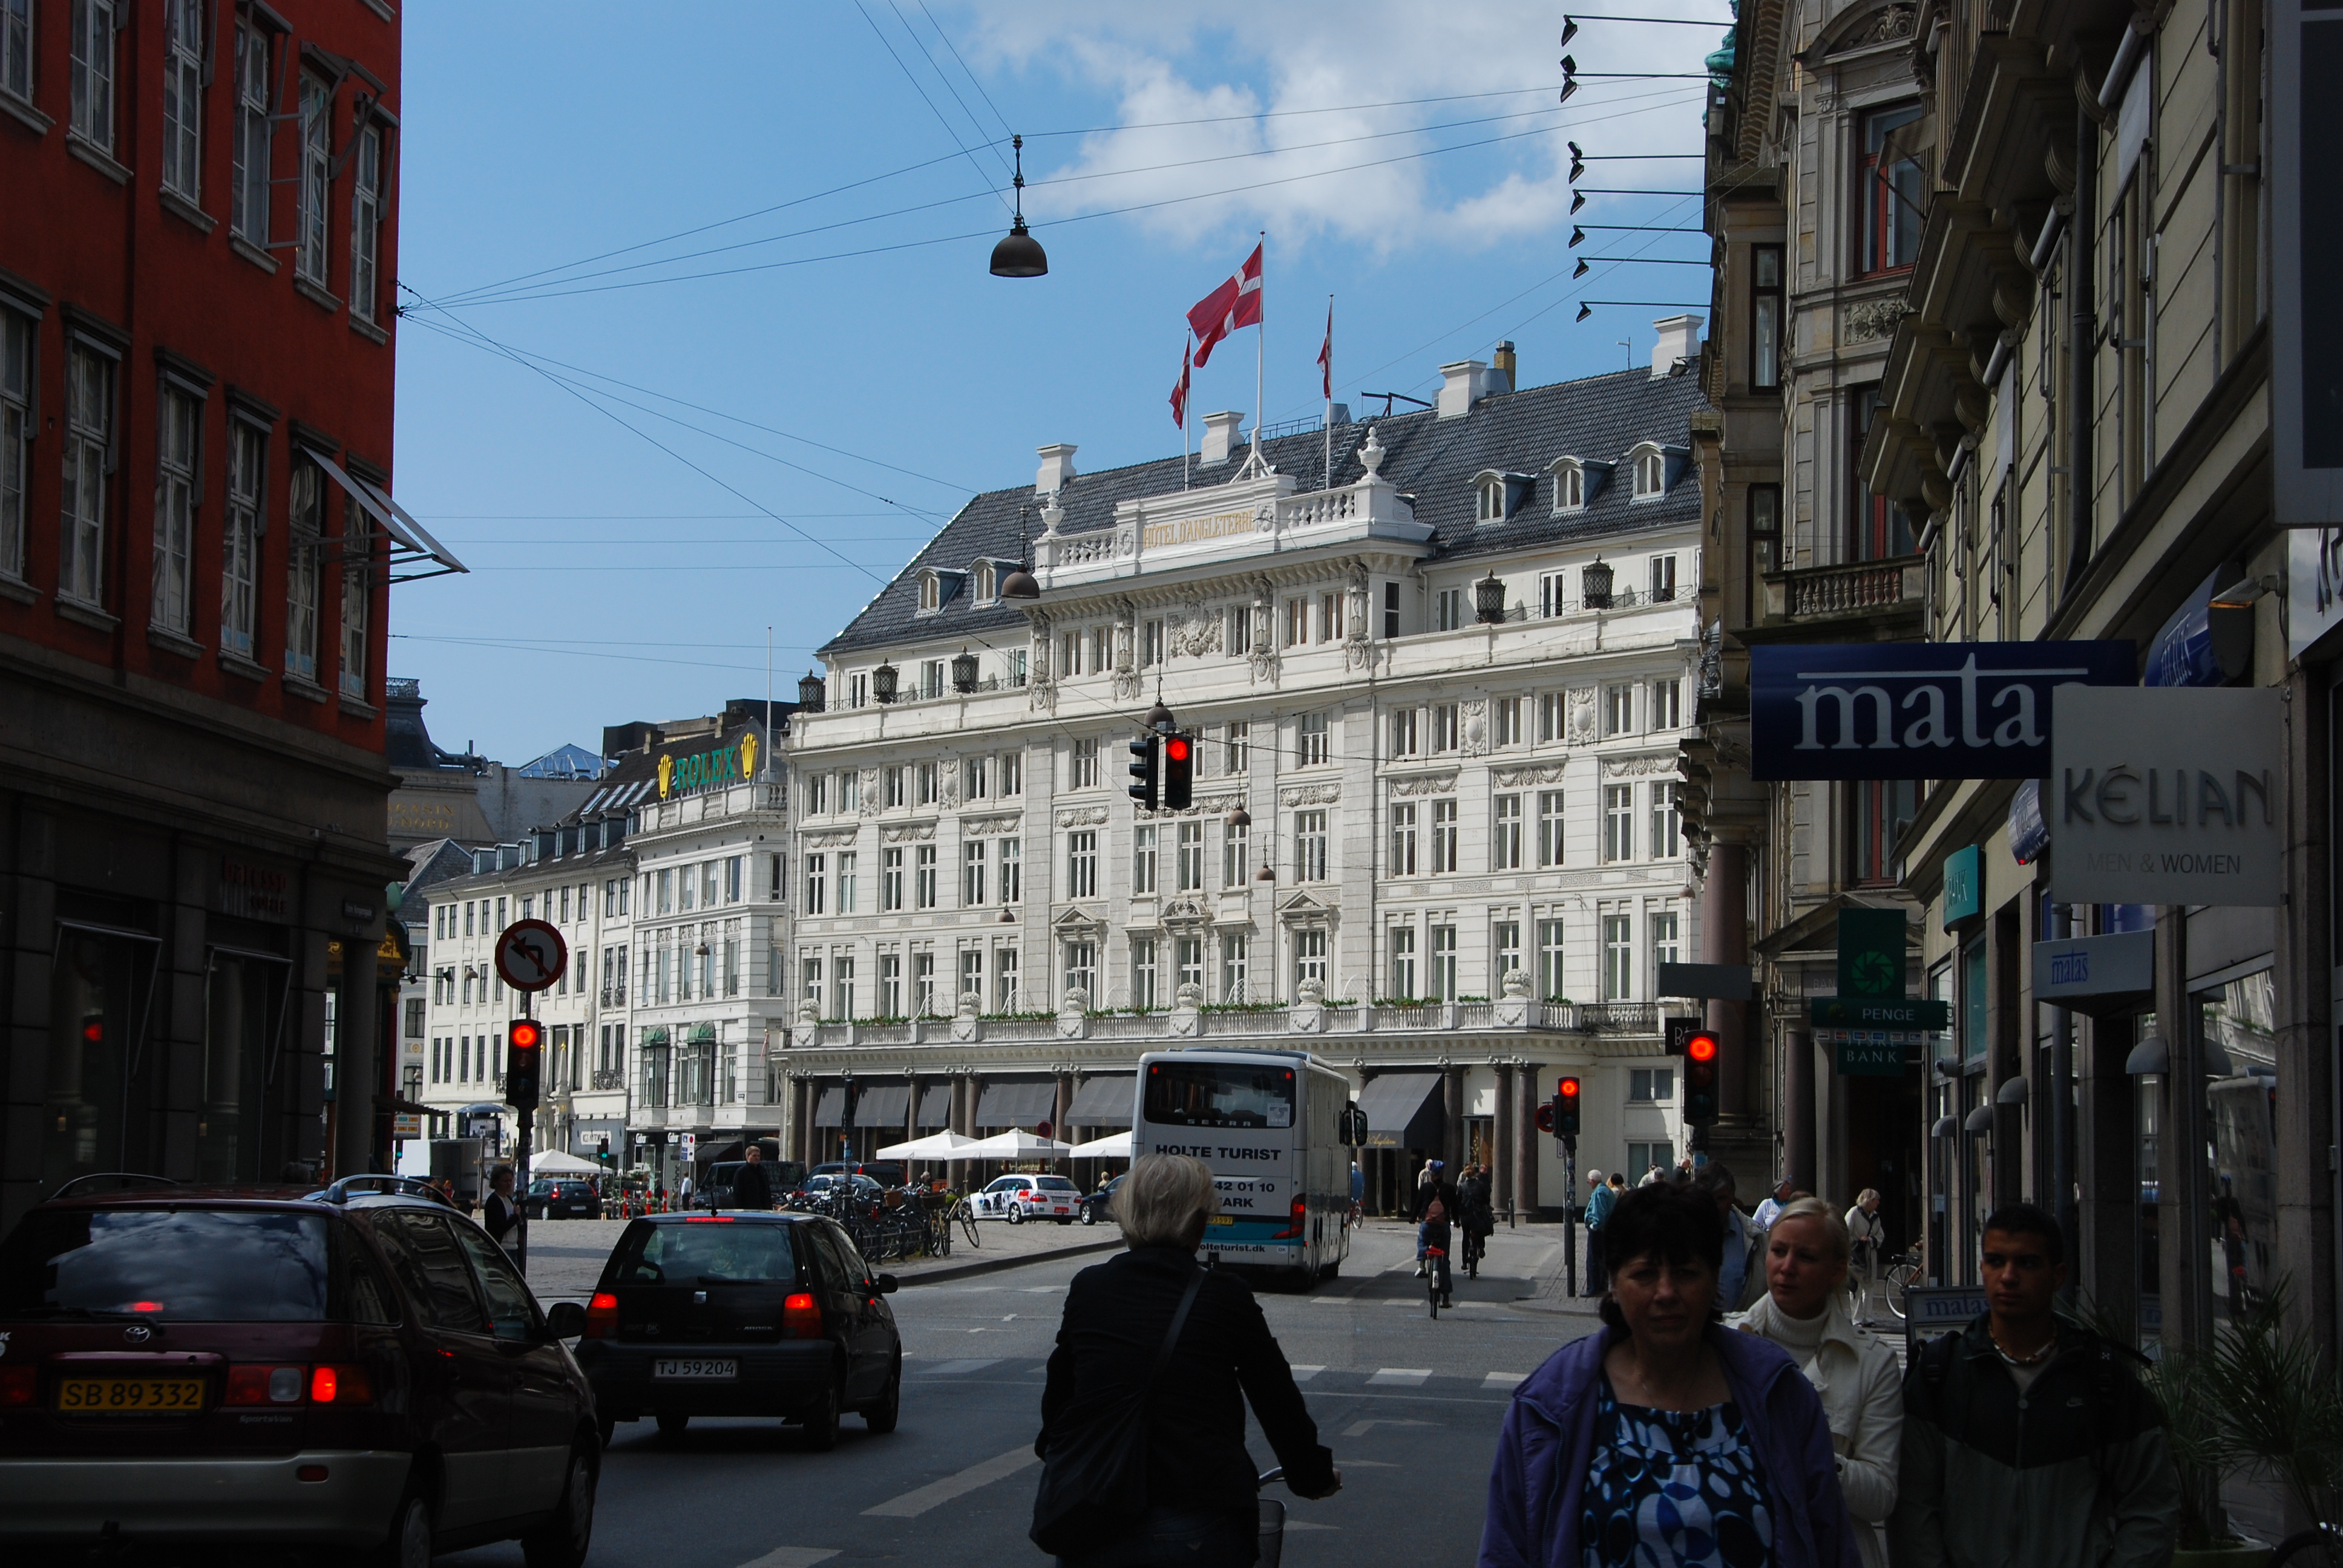 Hotel_dAngleterre_-_the_grand_olde_lady_of_Copenhagen_hotels_(2511026670)